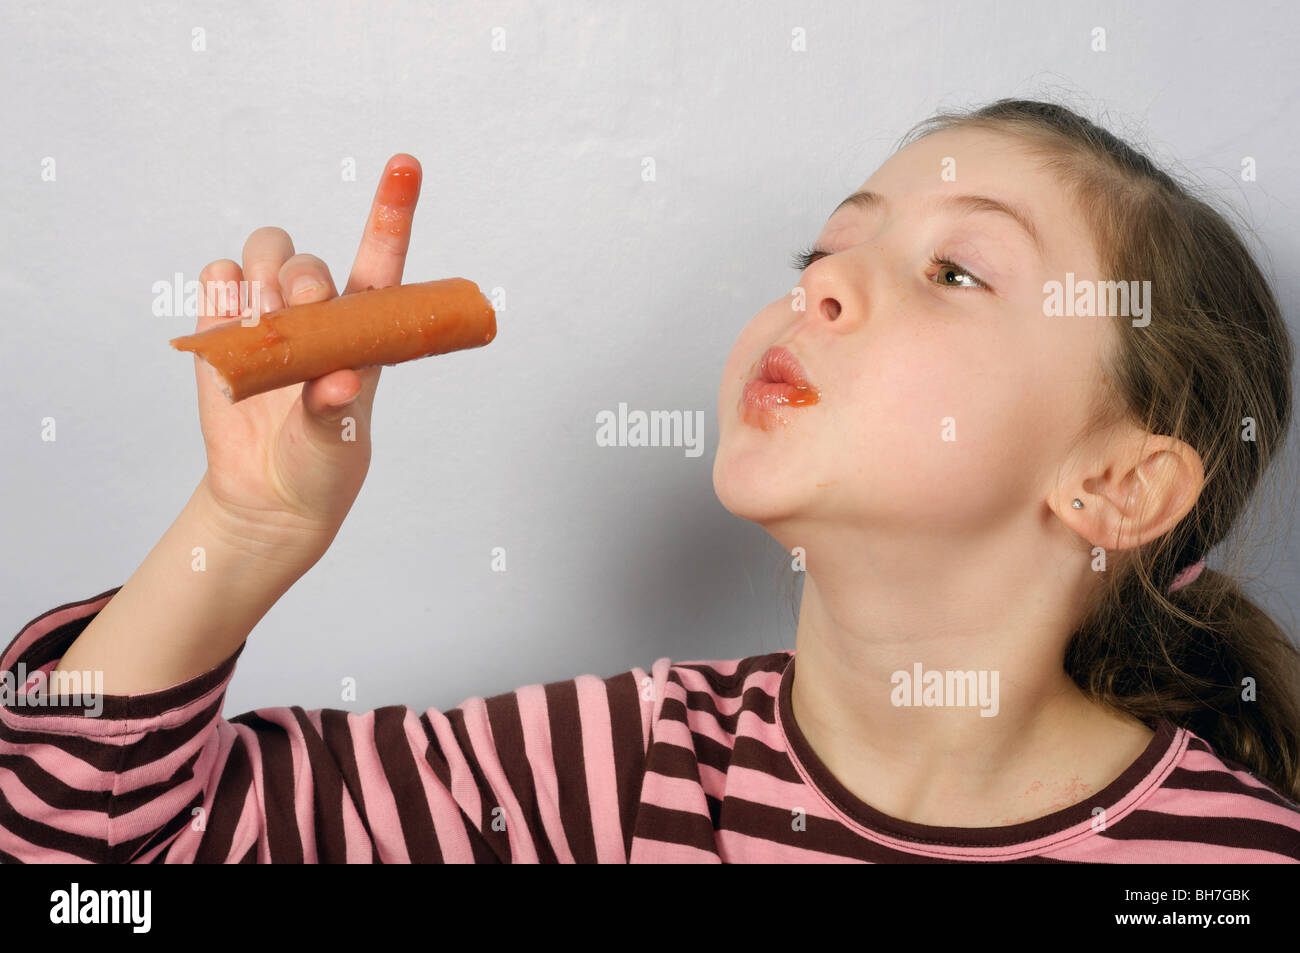 Young girl enjoying a Frankfurter sausage Stock Photo